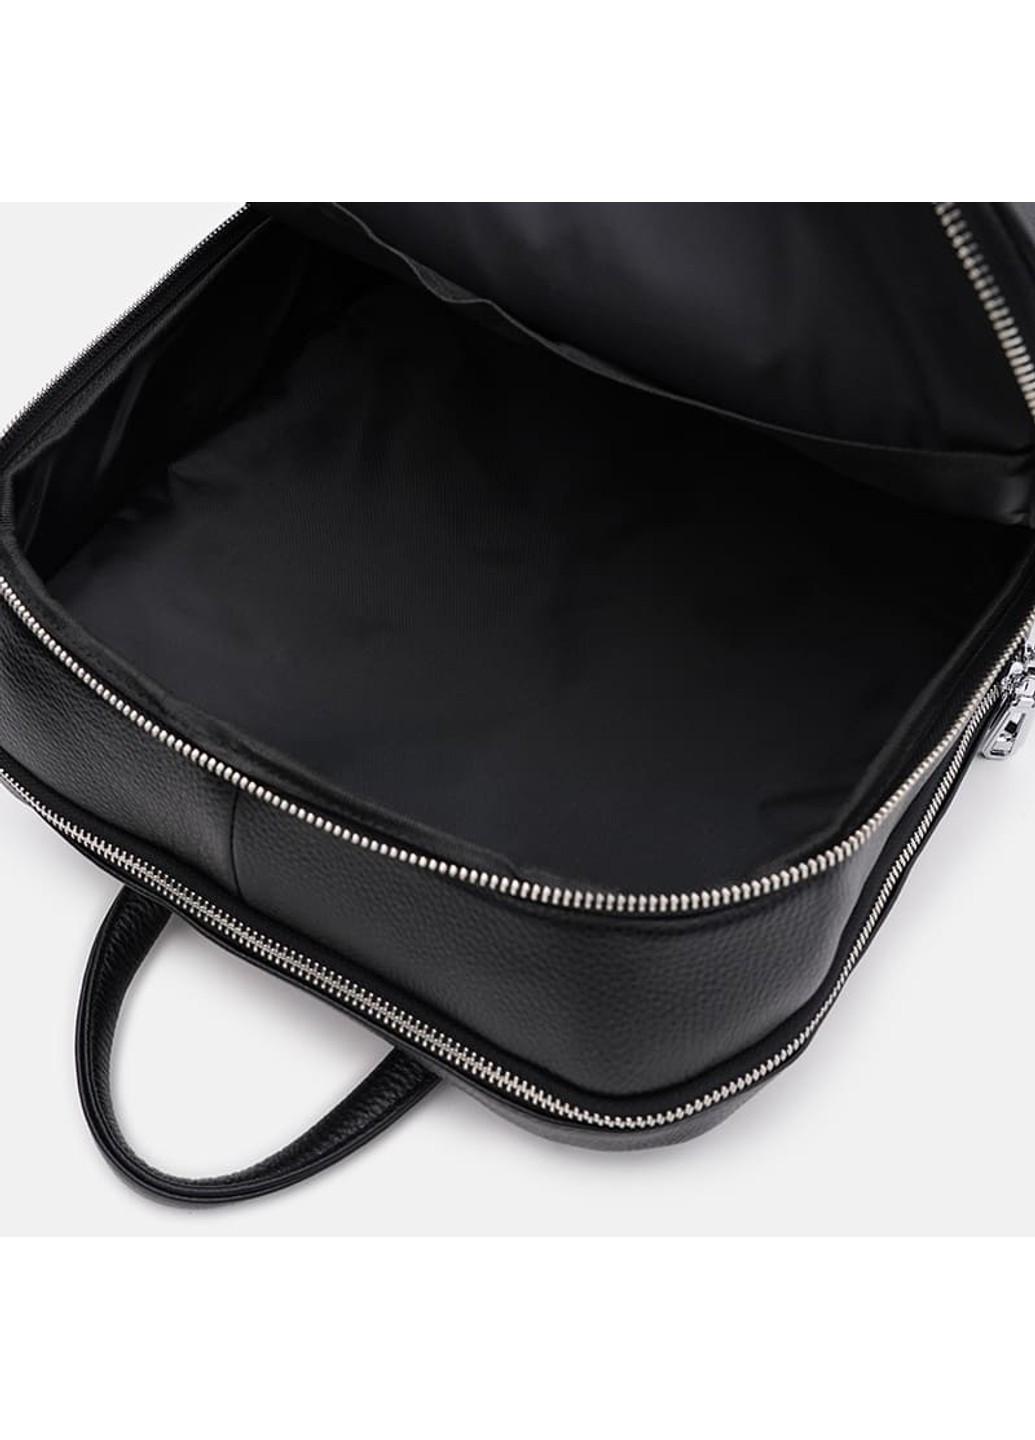 Мужской кожаный рюкзак K1b1210606bl-black Ricco Grande (274535841)